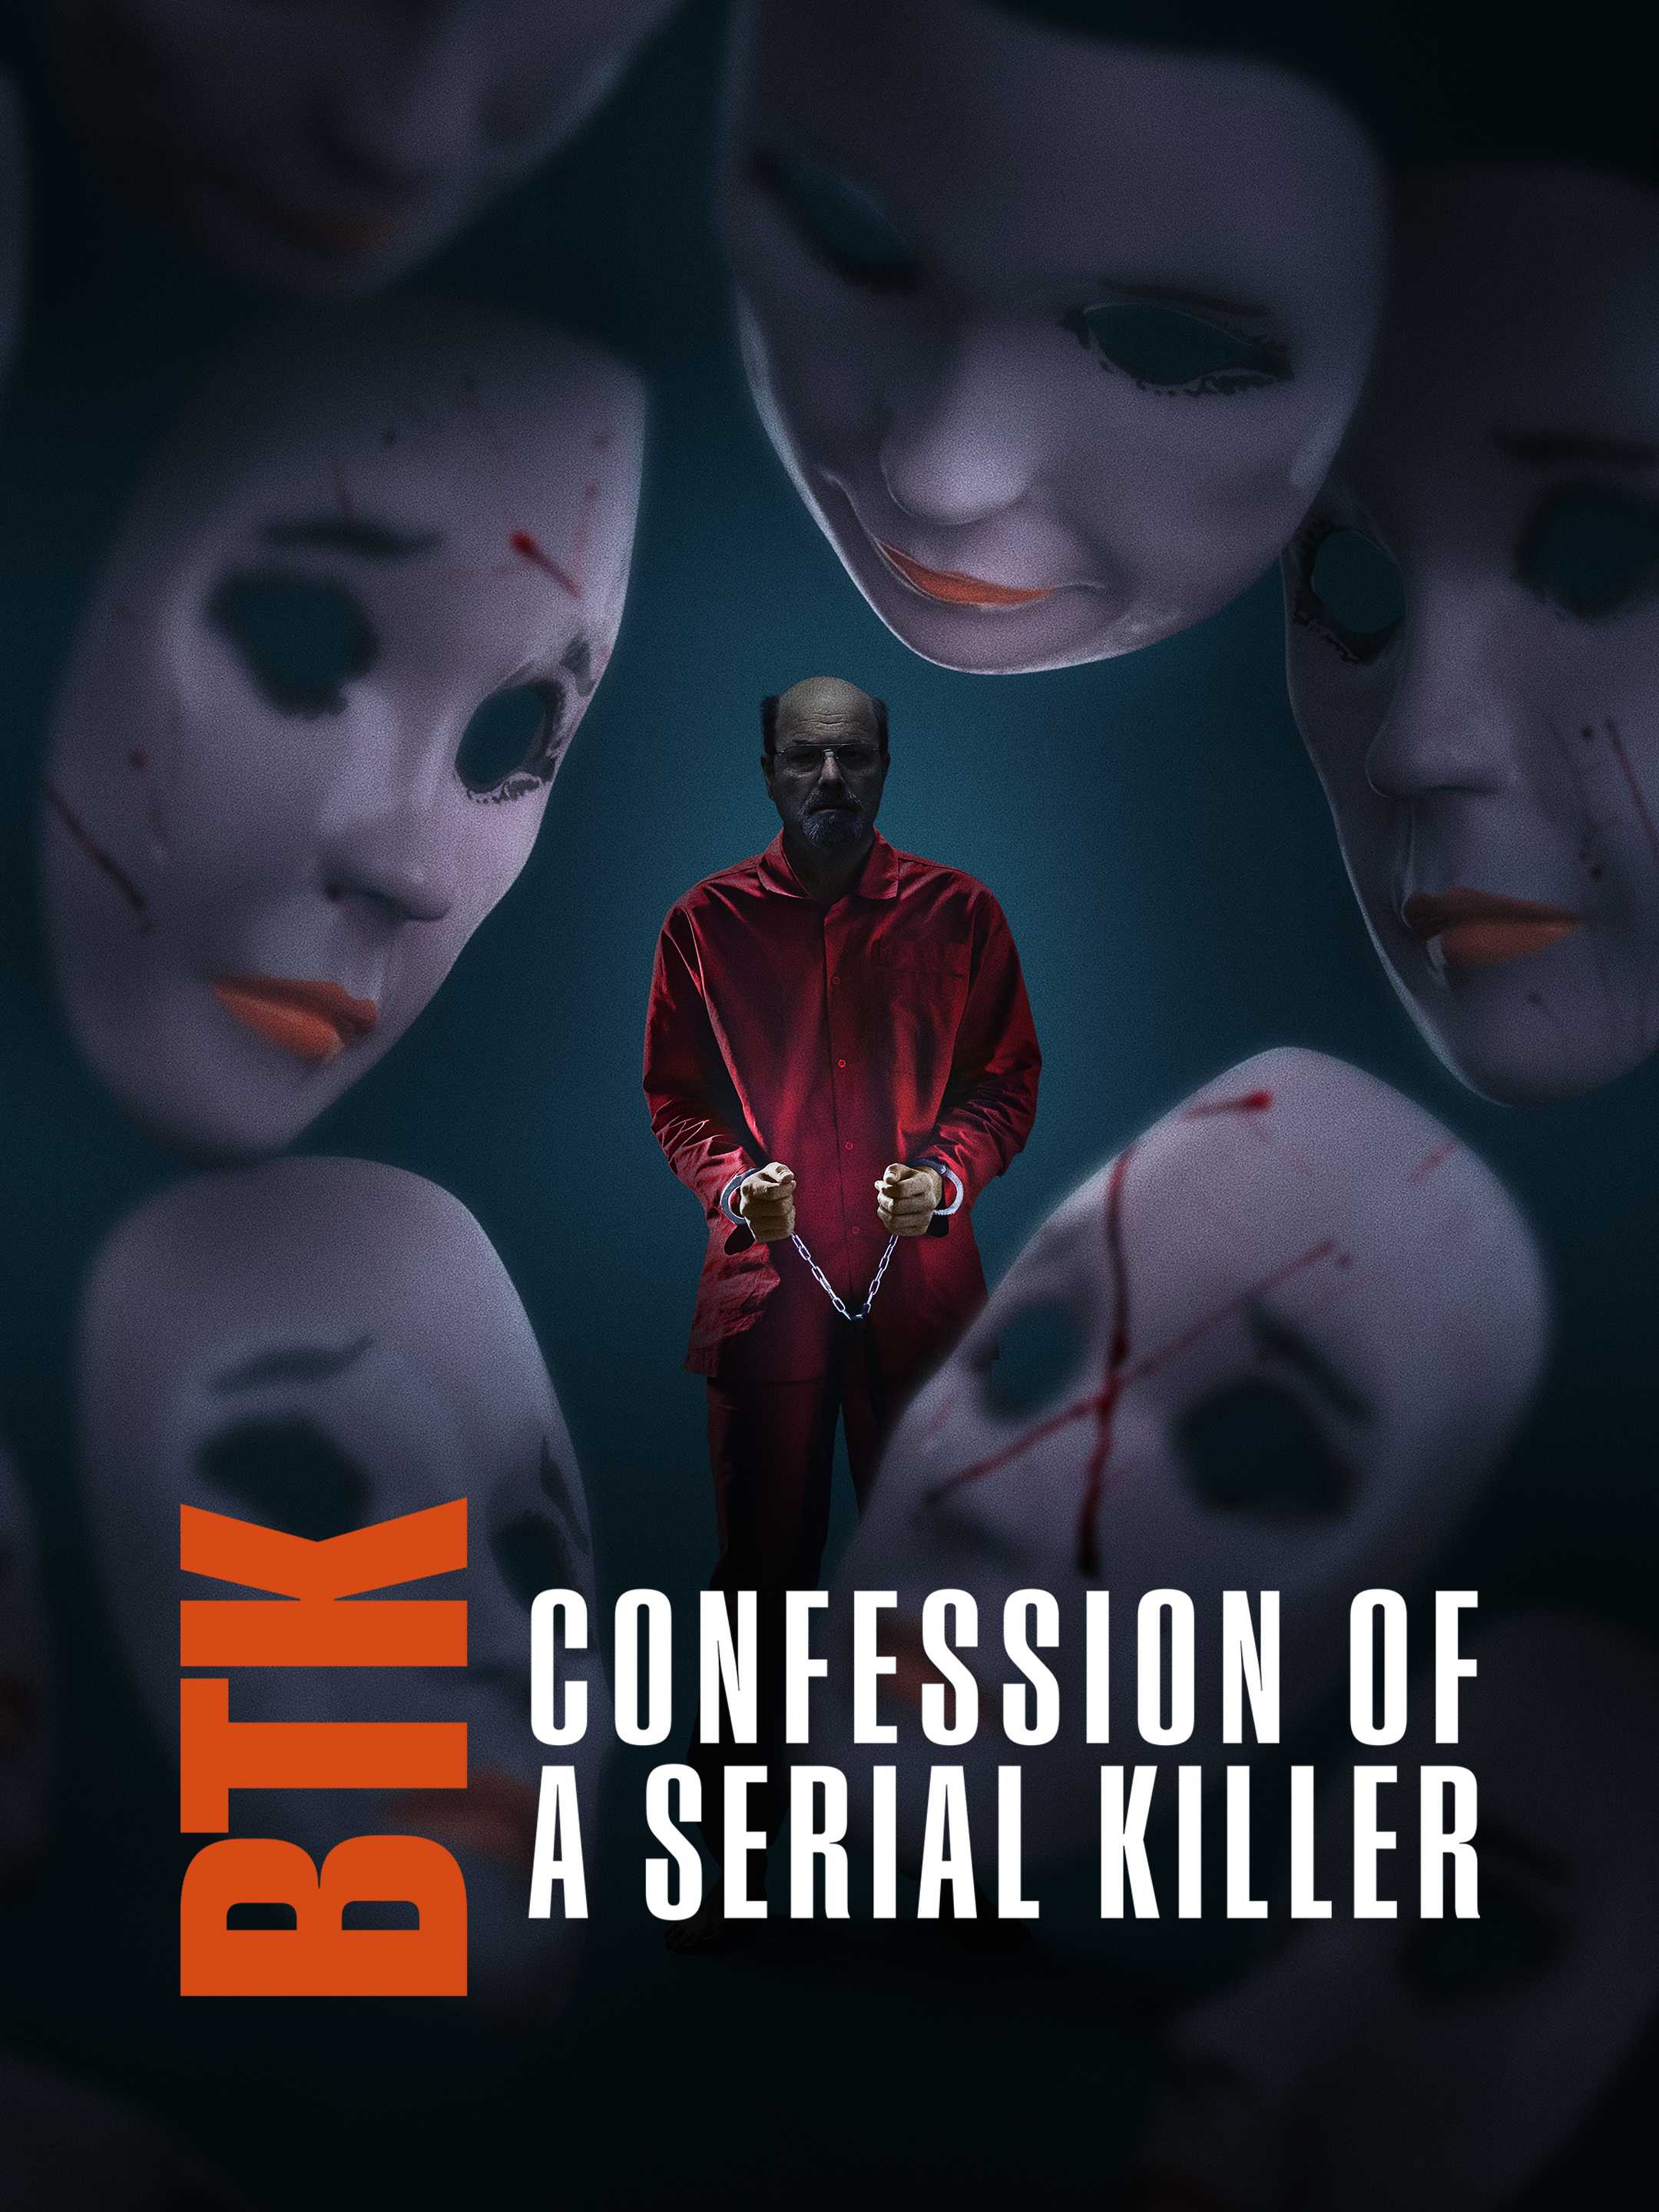 The 15 best serial killer documentaries to watch on Netflix – The Irish Sun